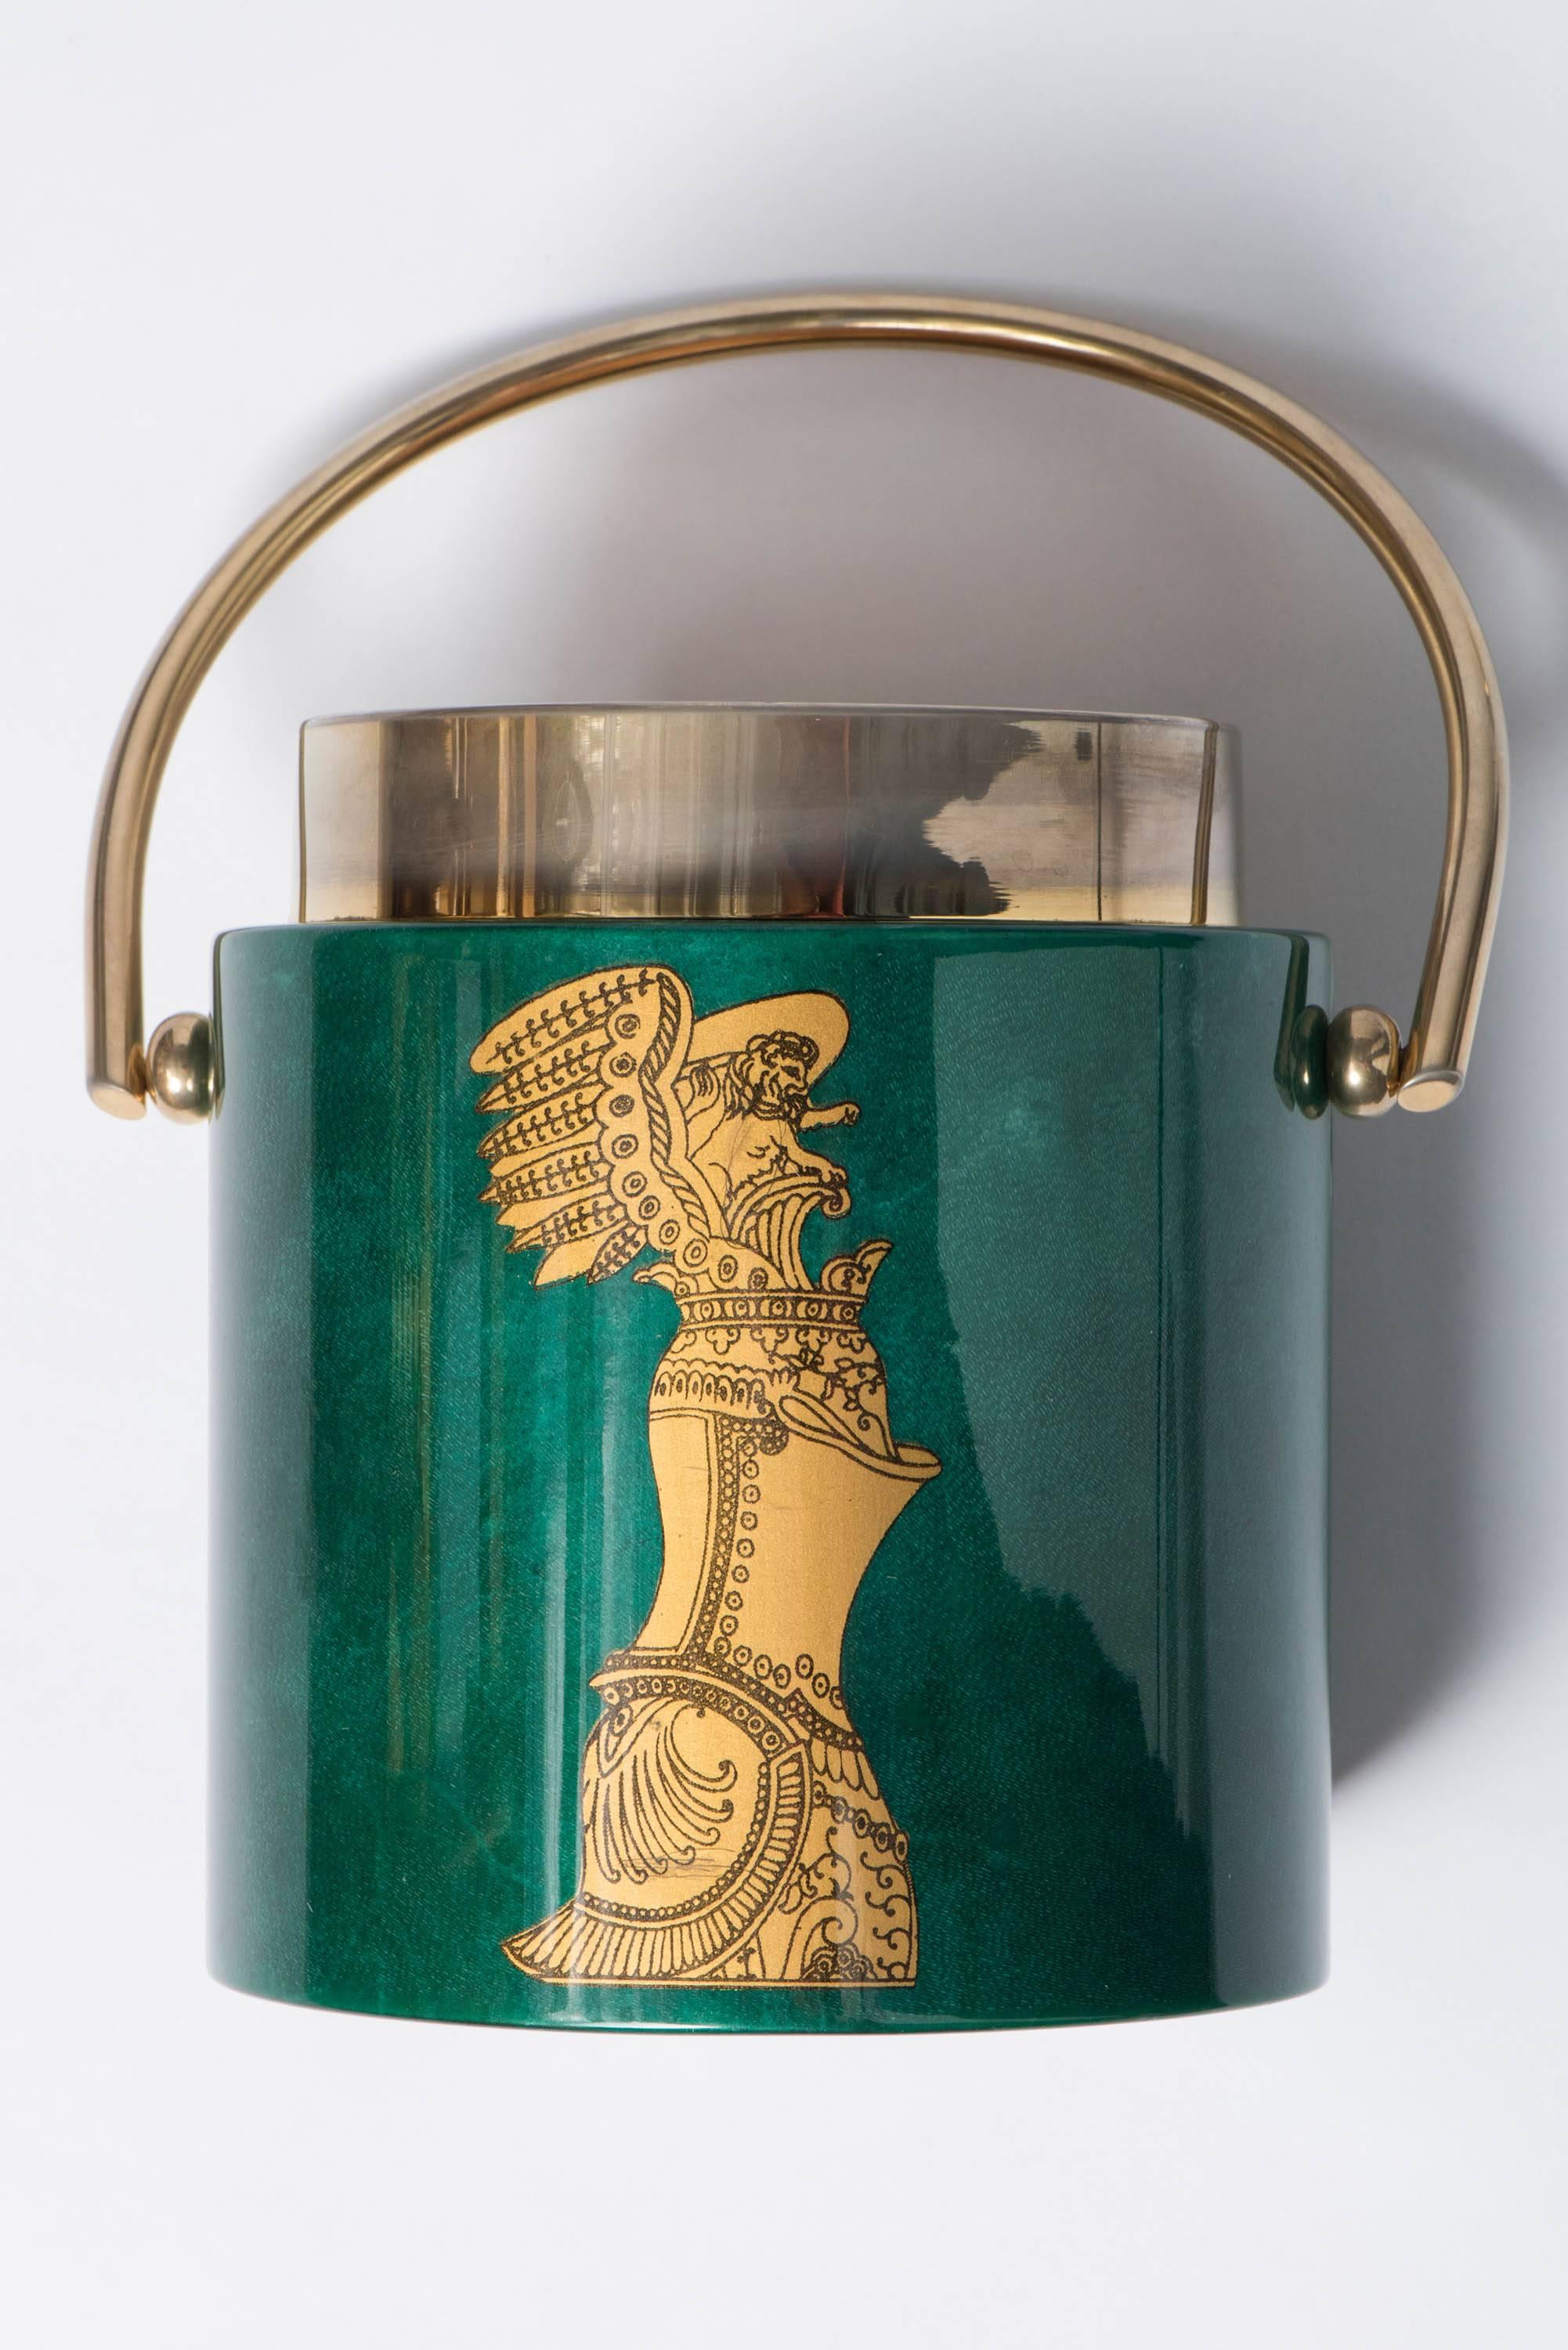 Metal Aldo Tura green lacquered parchment ice bucket, Italy, circa 1940